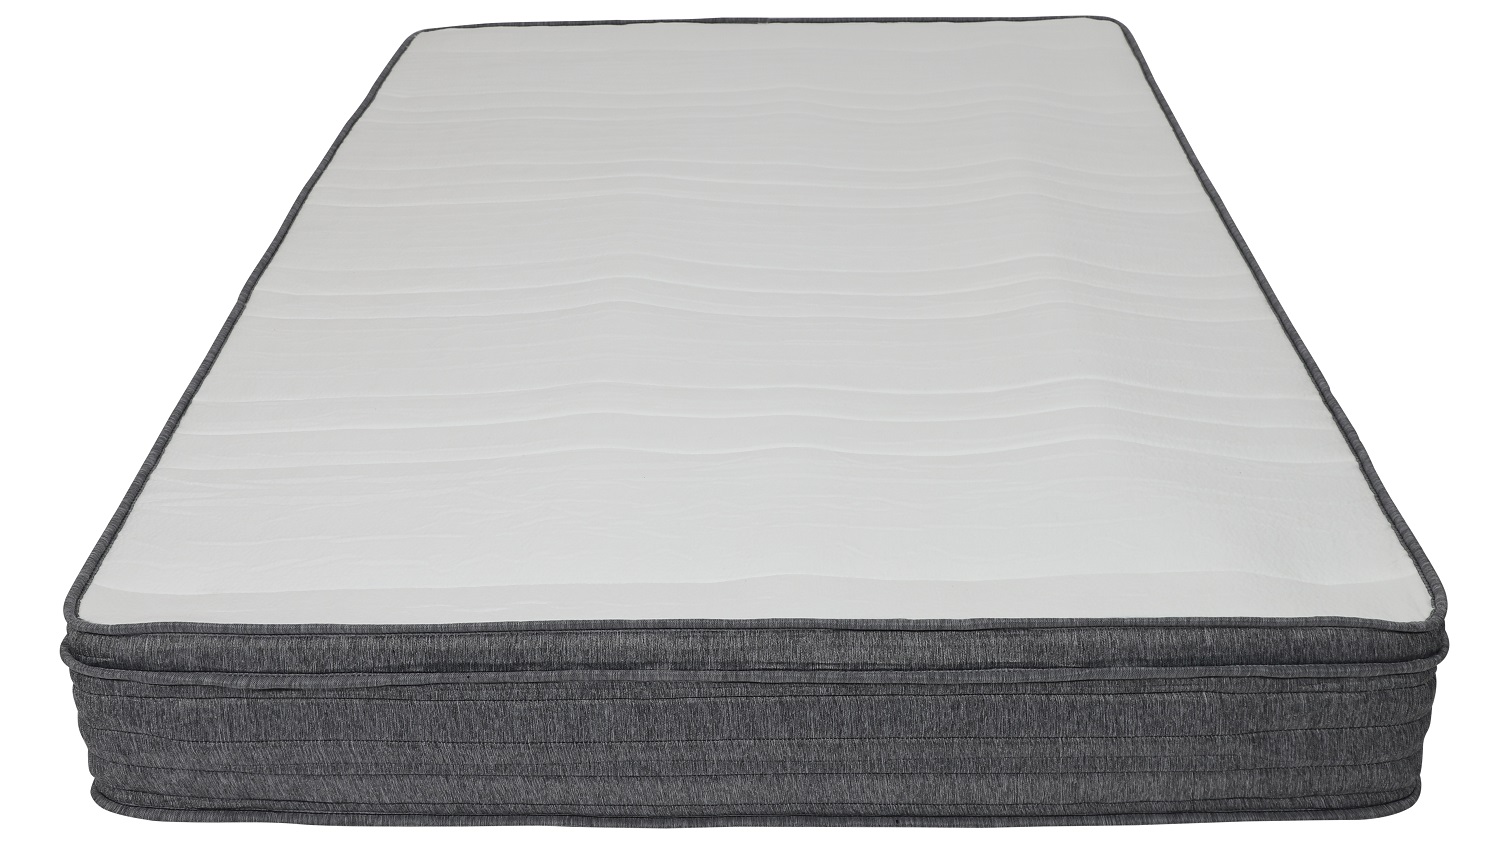 review of northern nights hybrid mattress